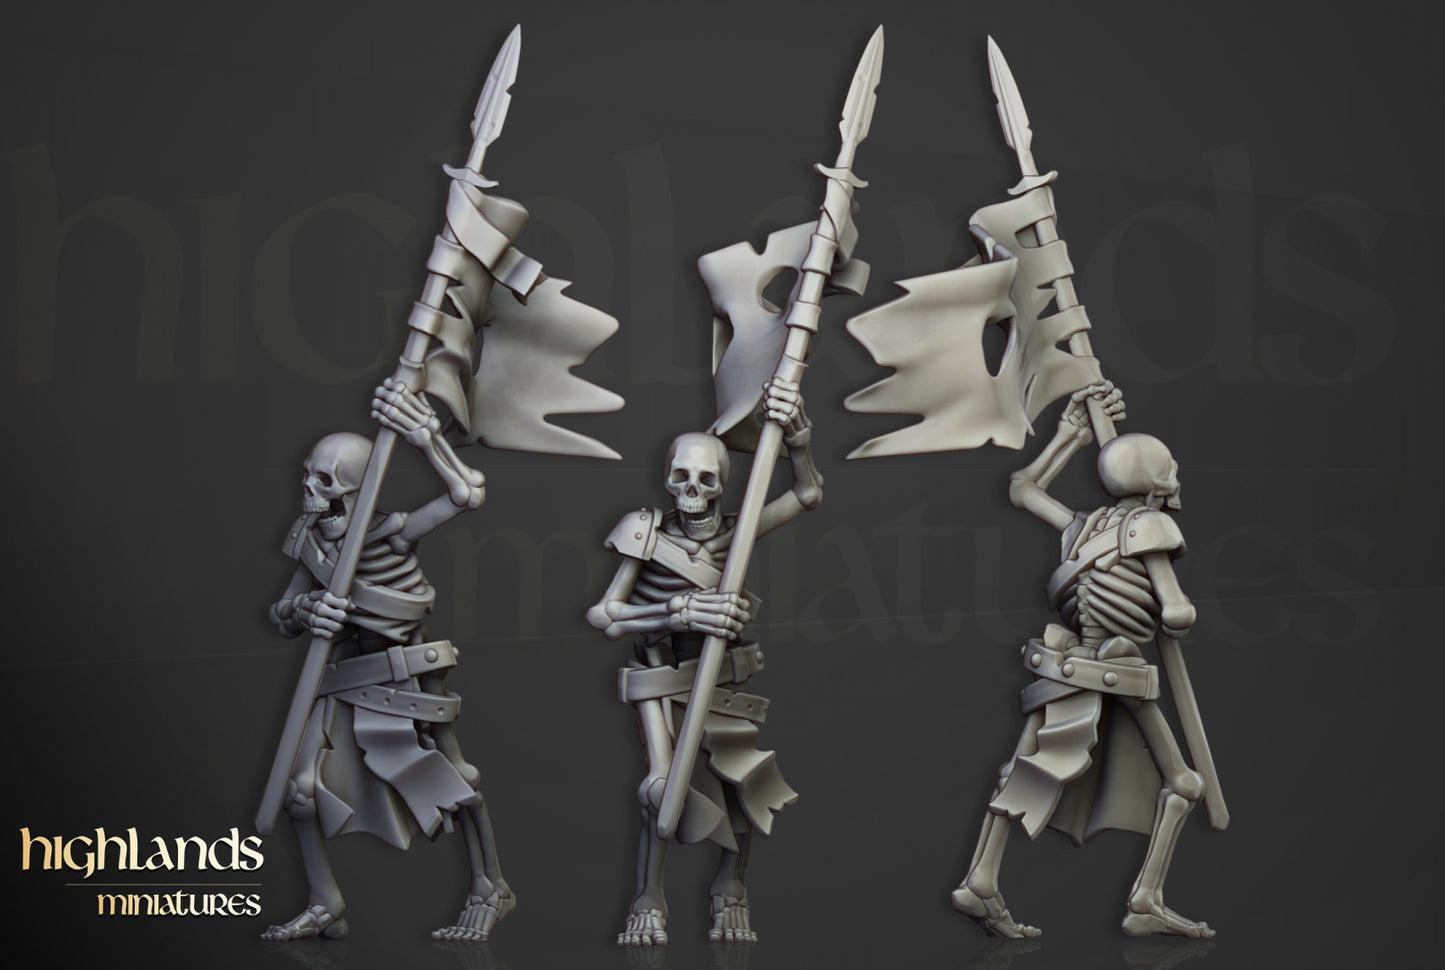 Skeleton Warriors by Highlands Miniatures